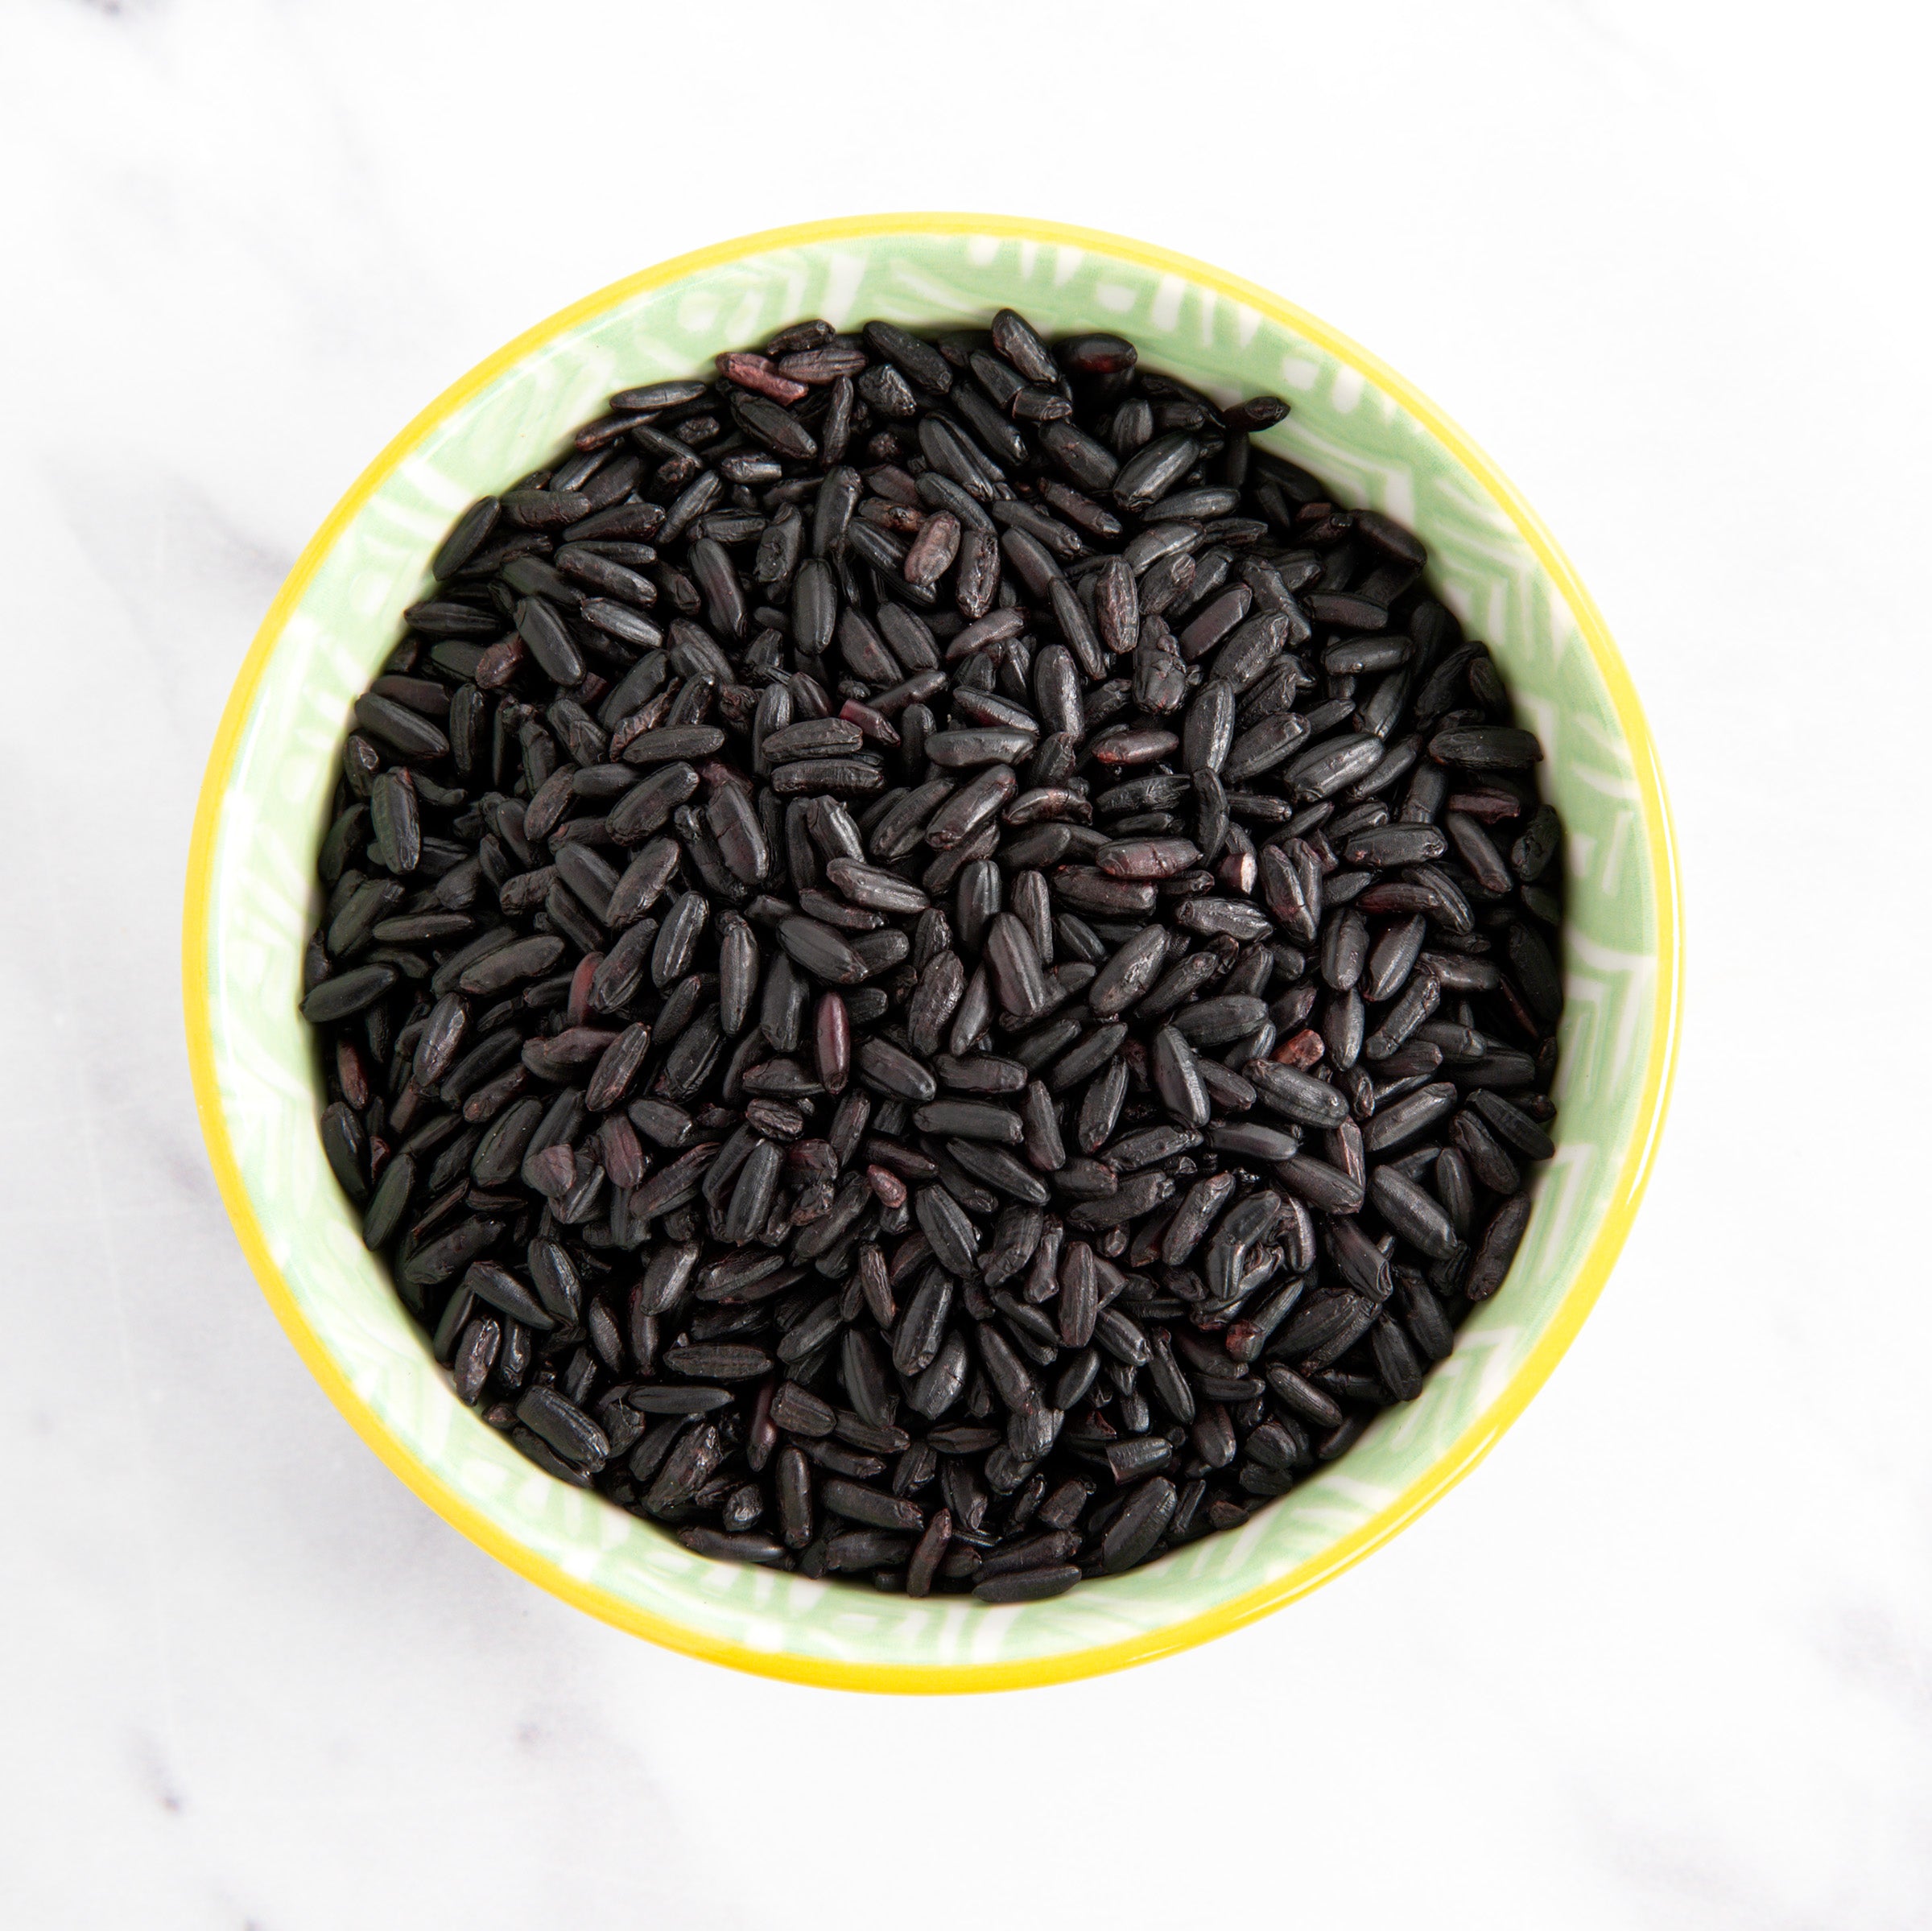 Forbidden Black Rice - Lotus Foods - Rice